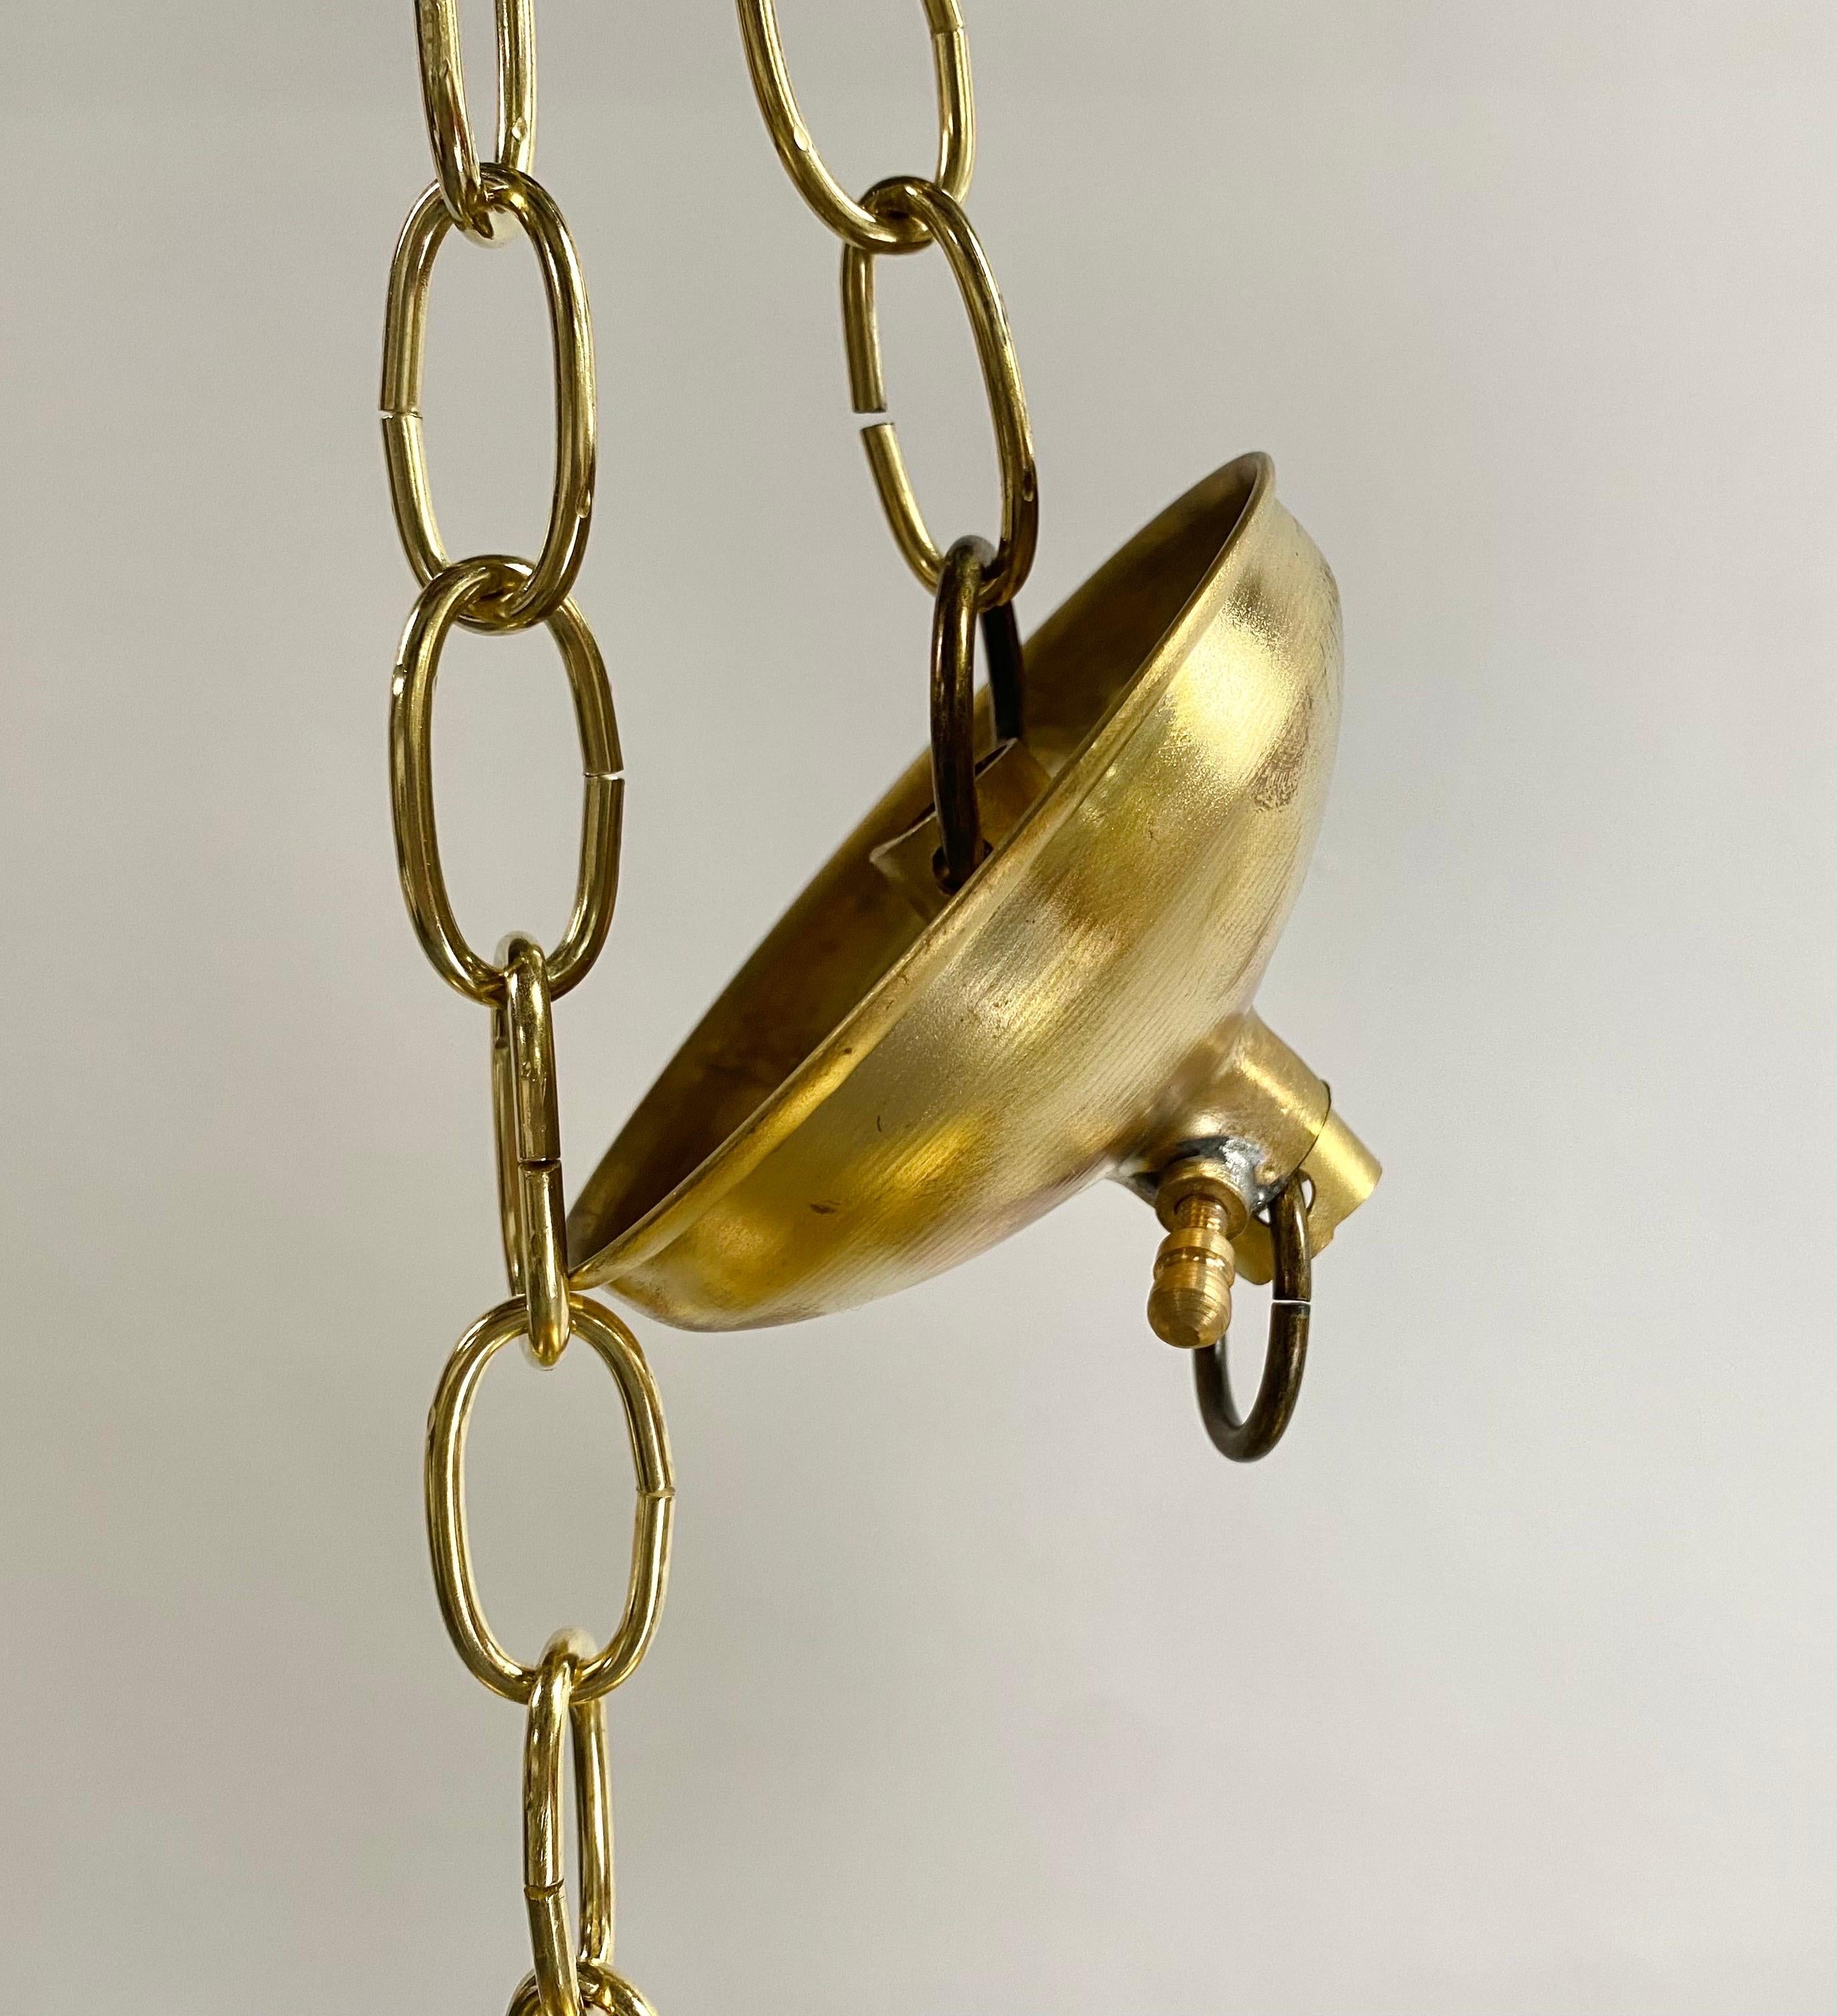 Modern Boho Chic Style Oval Brass Pendant or Lantern For Sale 2